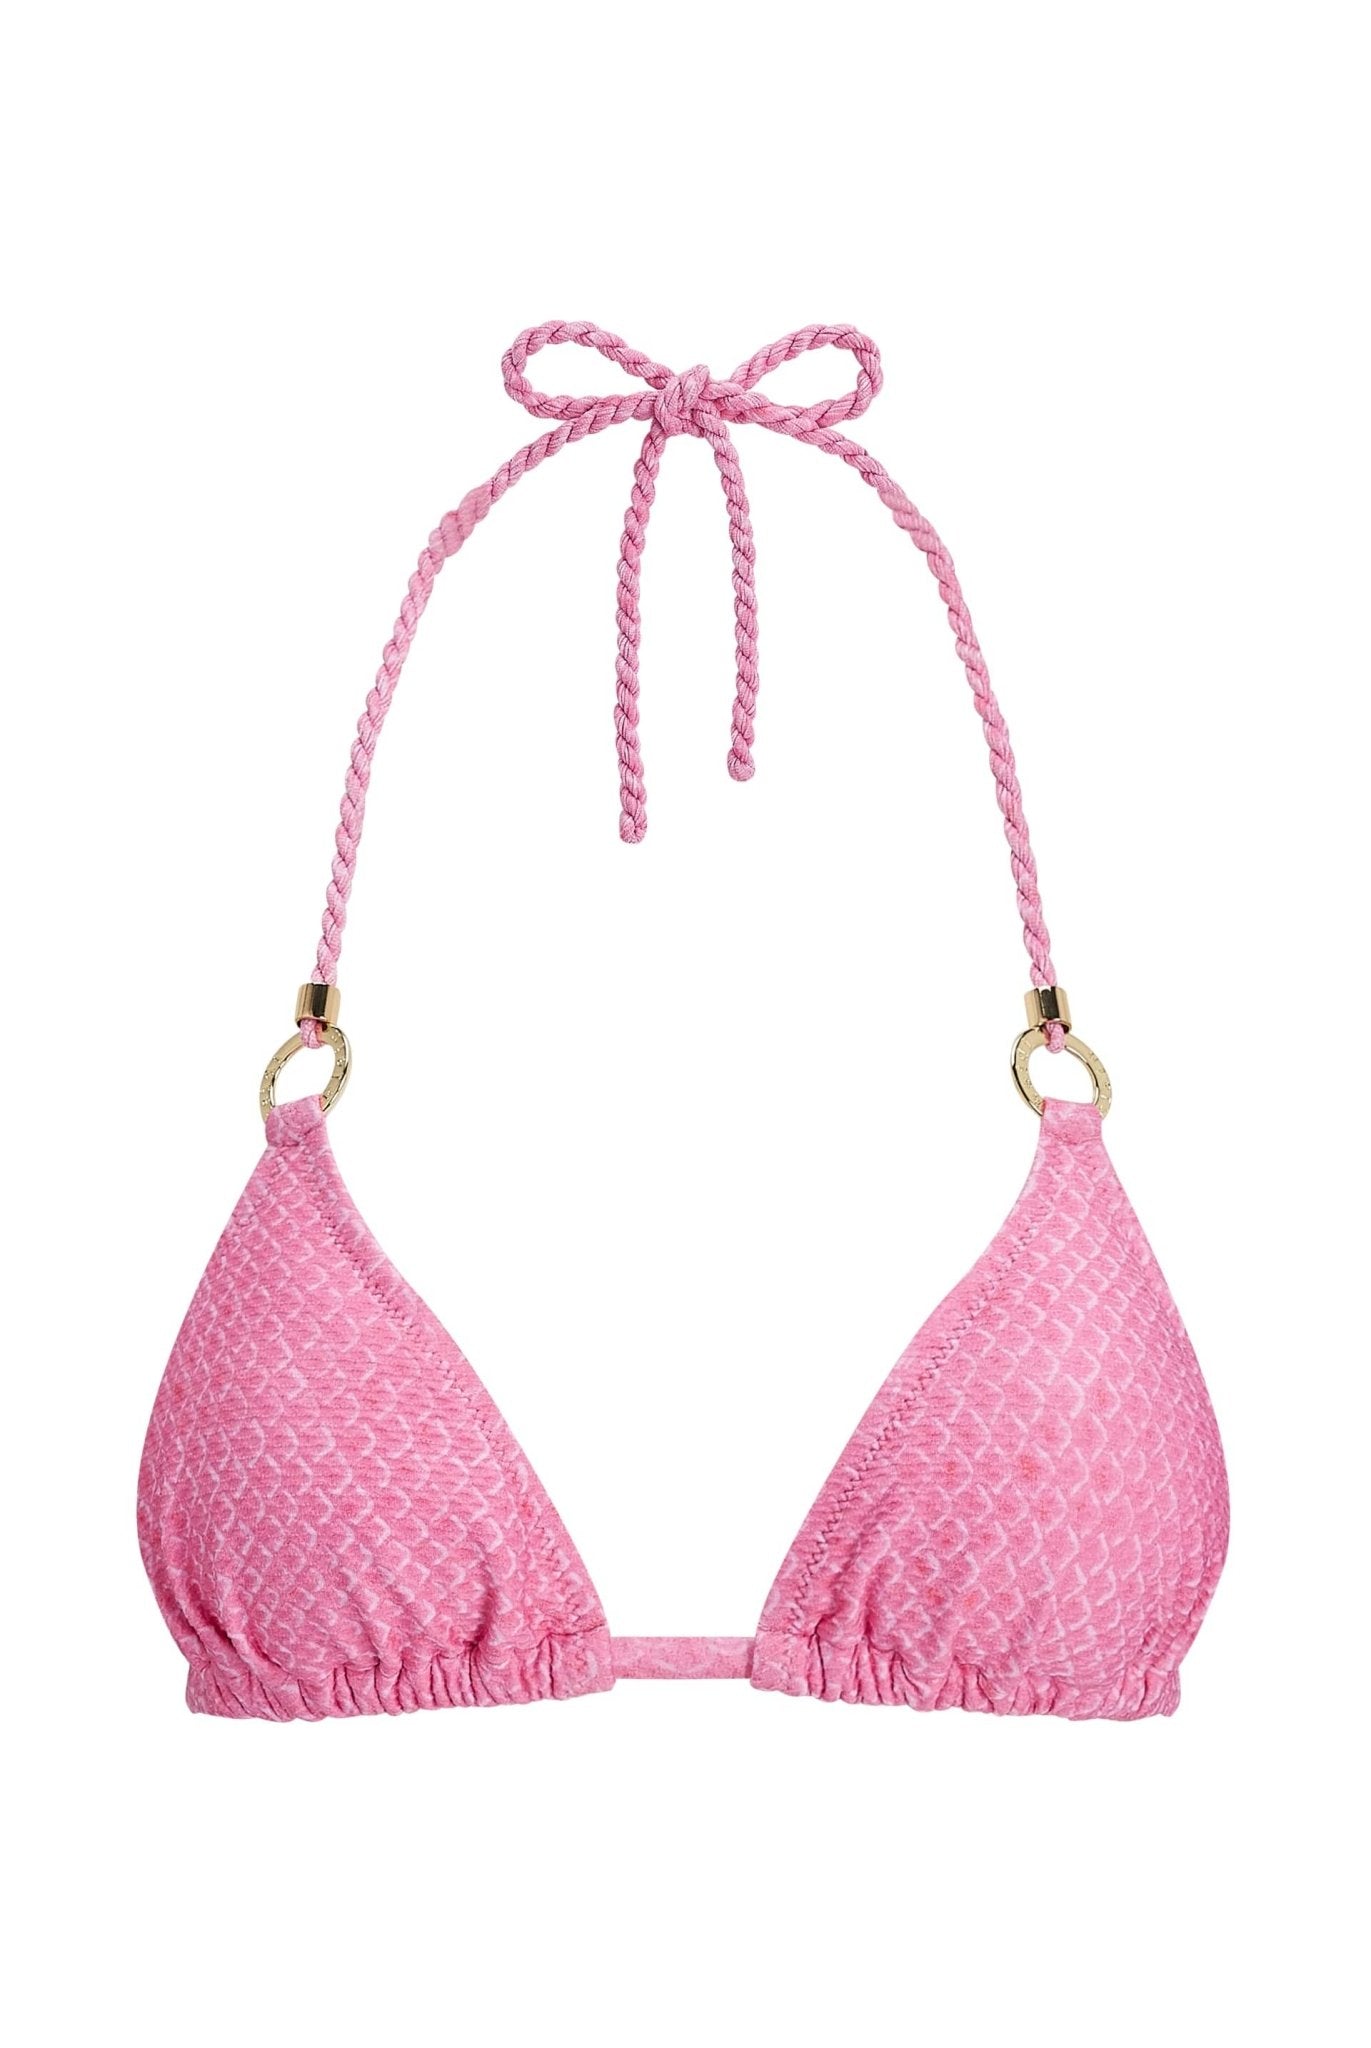 Guana Island Ring Triangle Top In Pink - Heidi Klein - UK Store